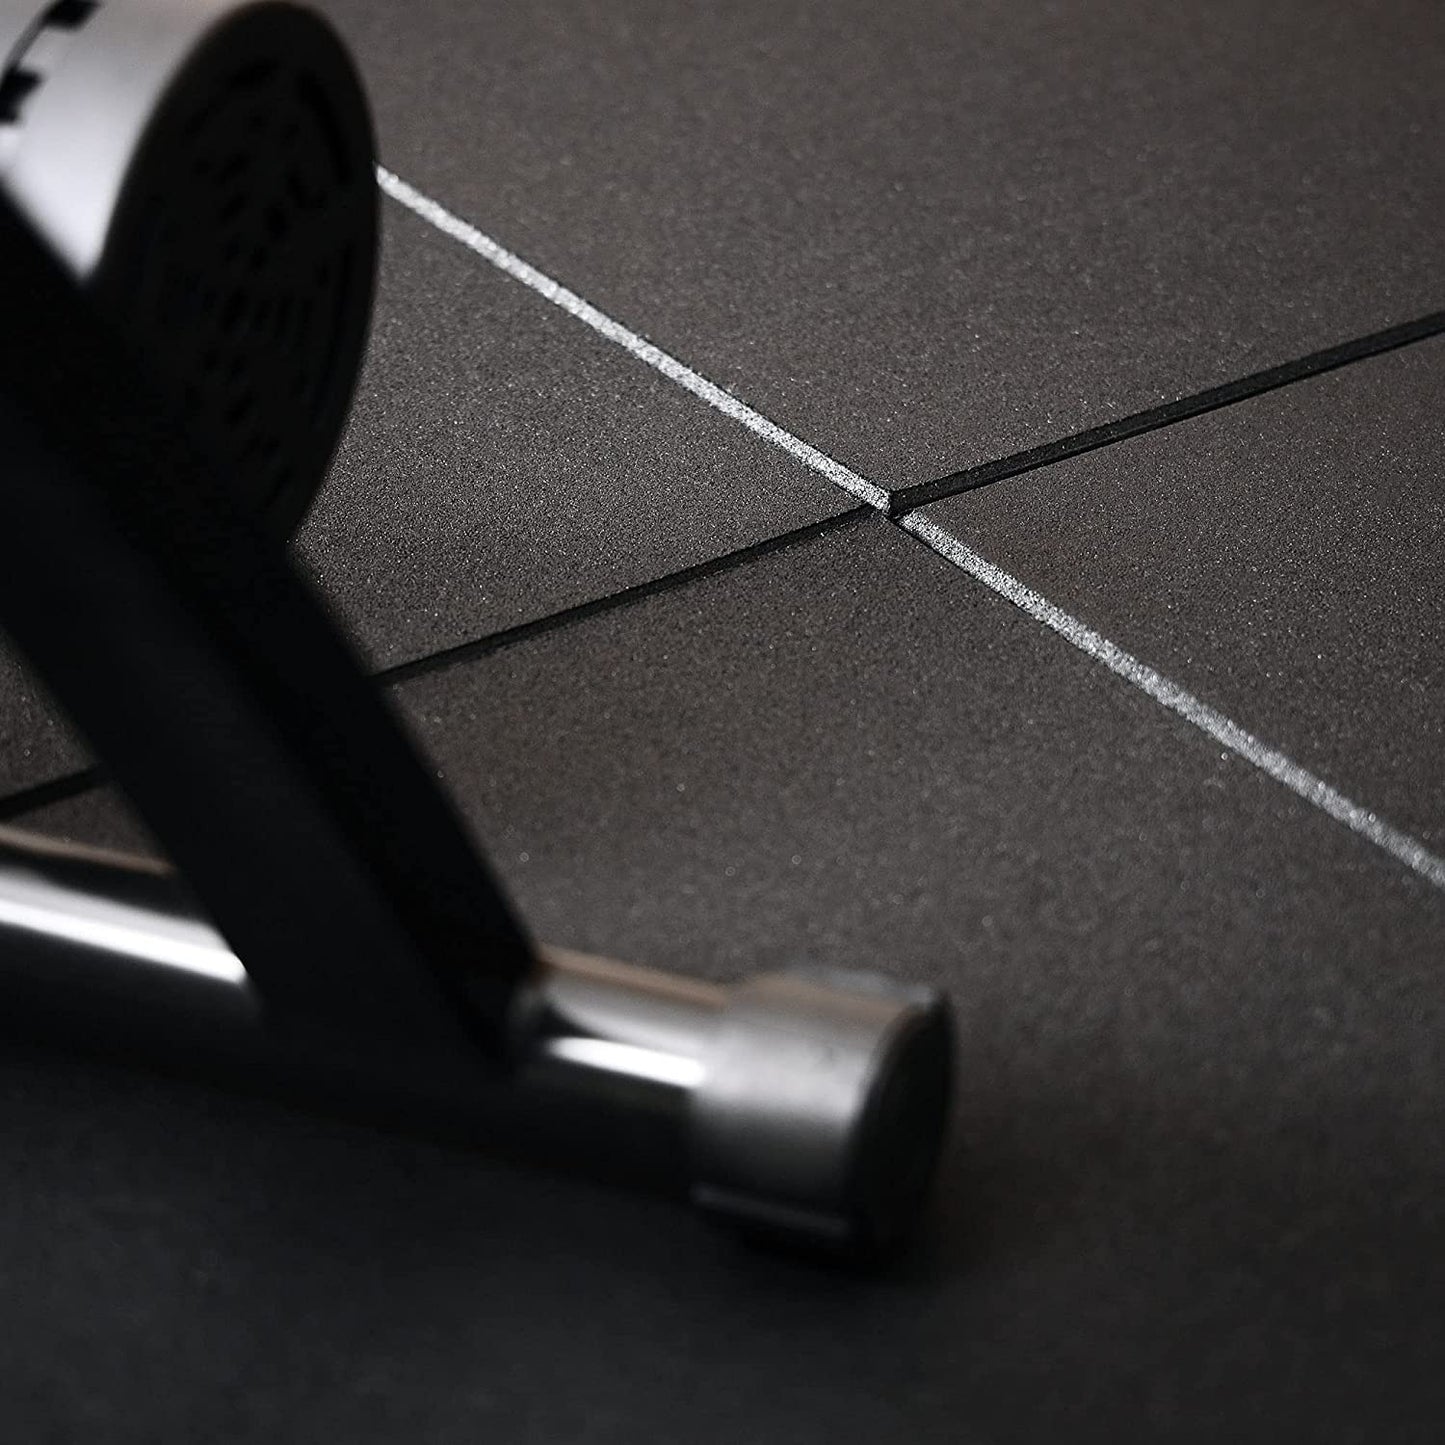 1441 Fitness Heavy Duty Gym Tile 15 mm Black - 100 x 100 CM | Rubber Flooring